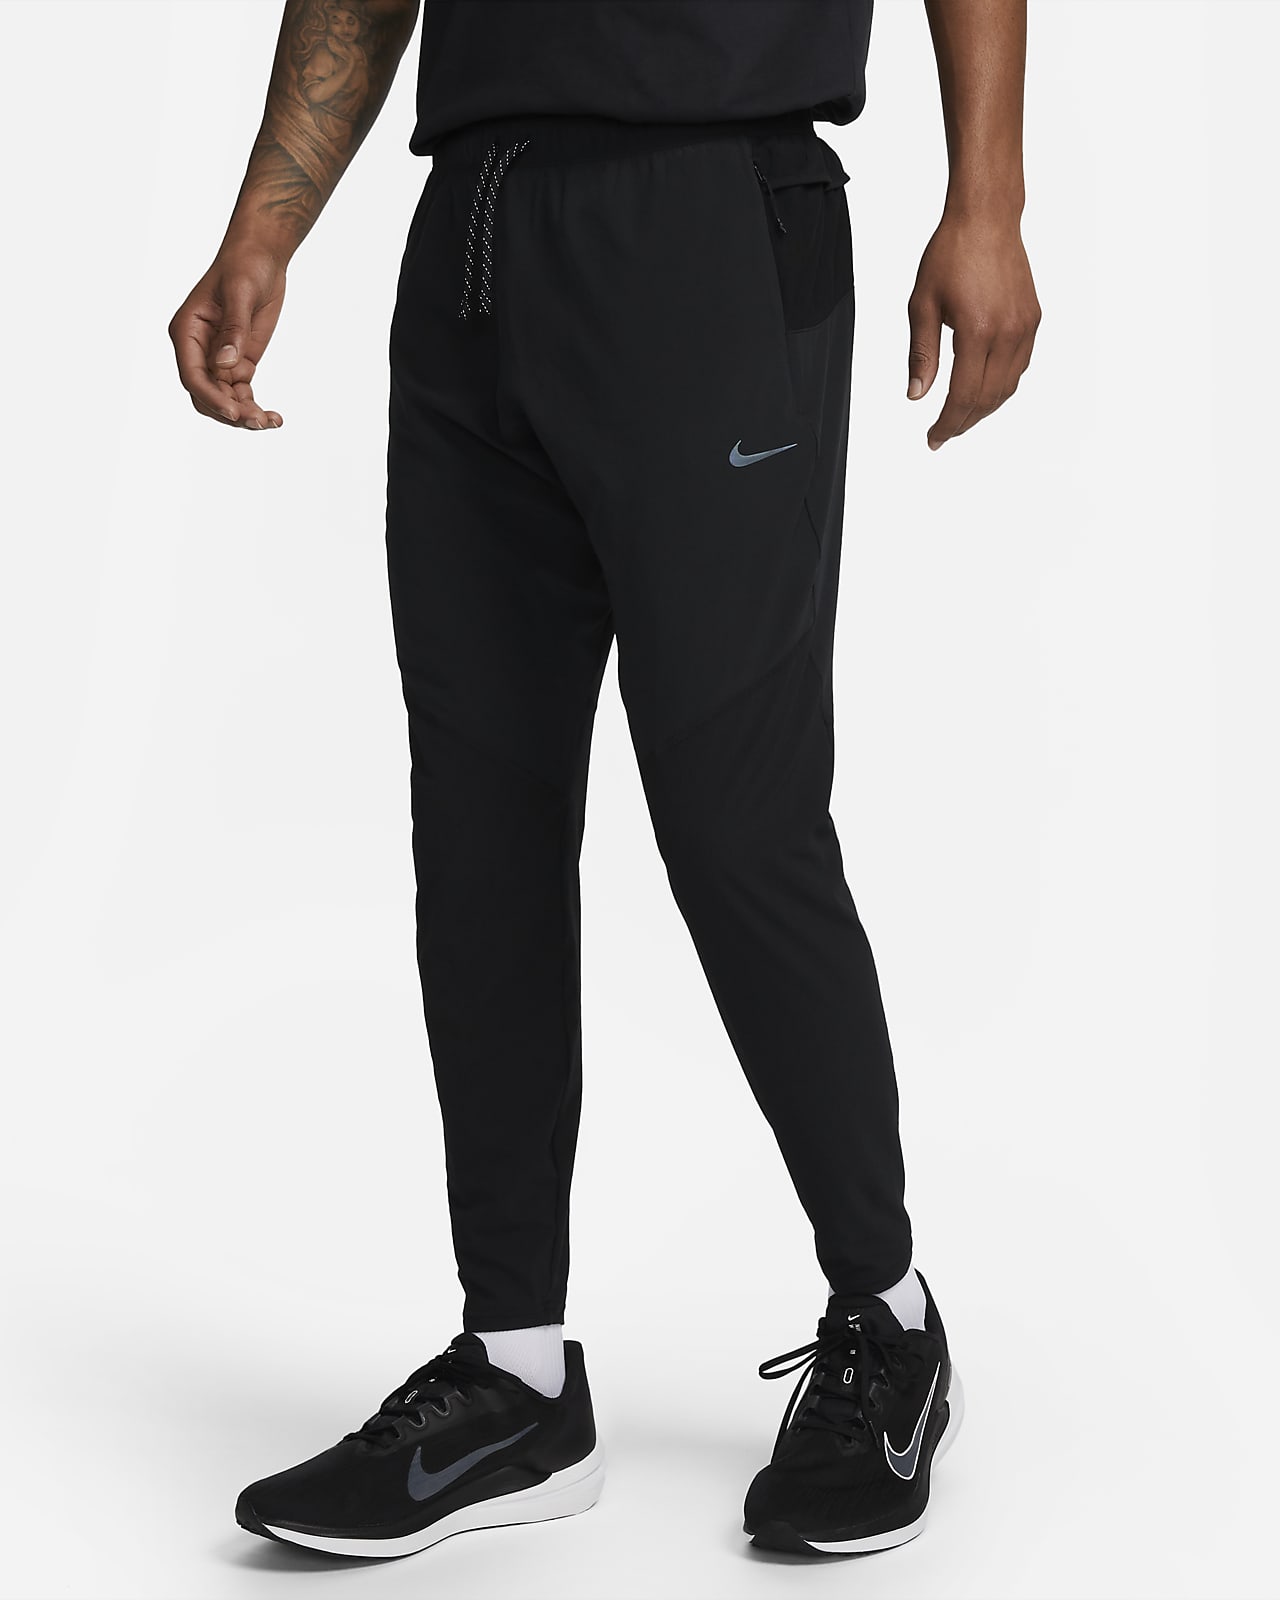 Navy Cut & Sew Full Length Active Wear Men Slim Fit Track Pants - Selling  Fast at Pantaloons.com